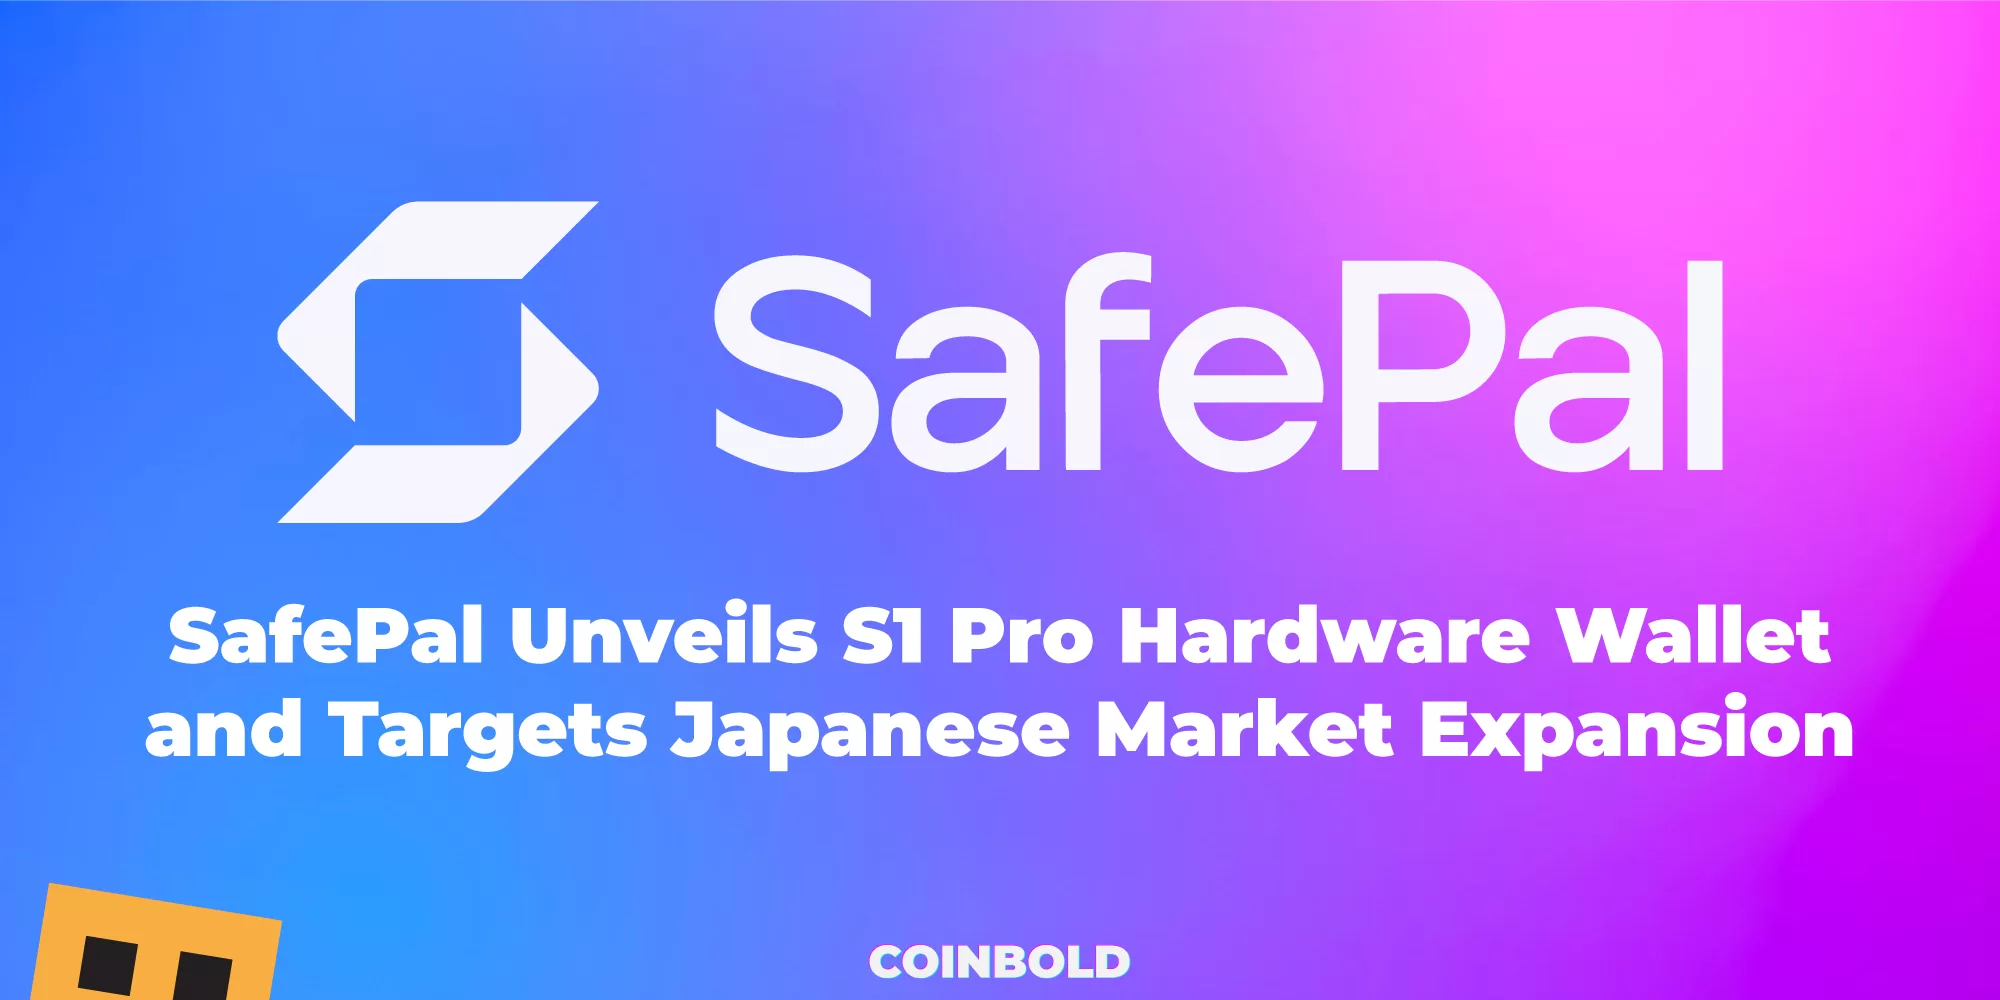 SafePal Unveils S1 Pro Hardware Wallet and Targets Japanese Market Expansion